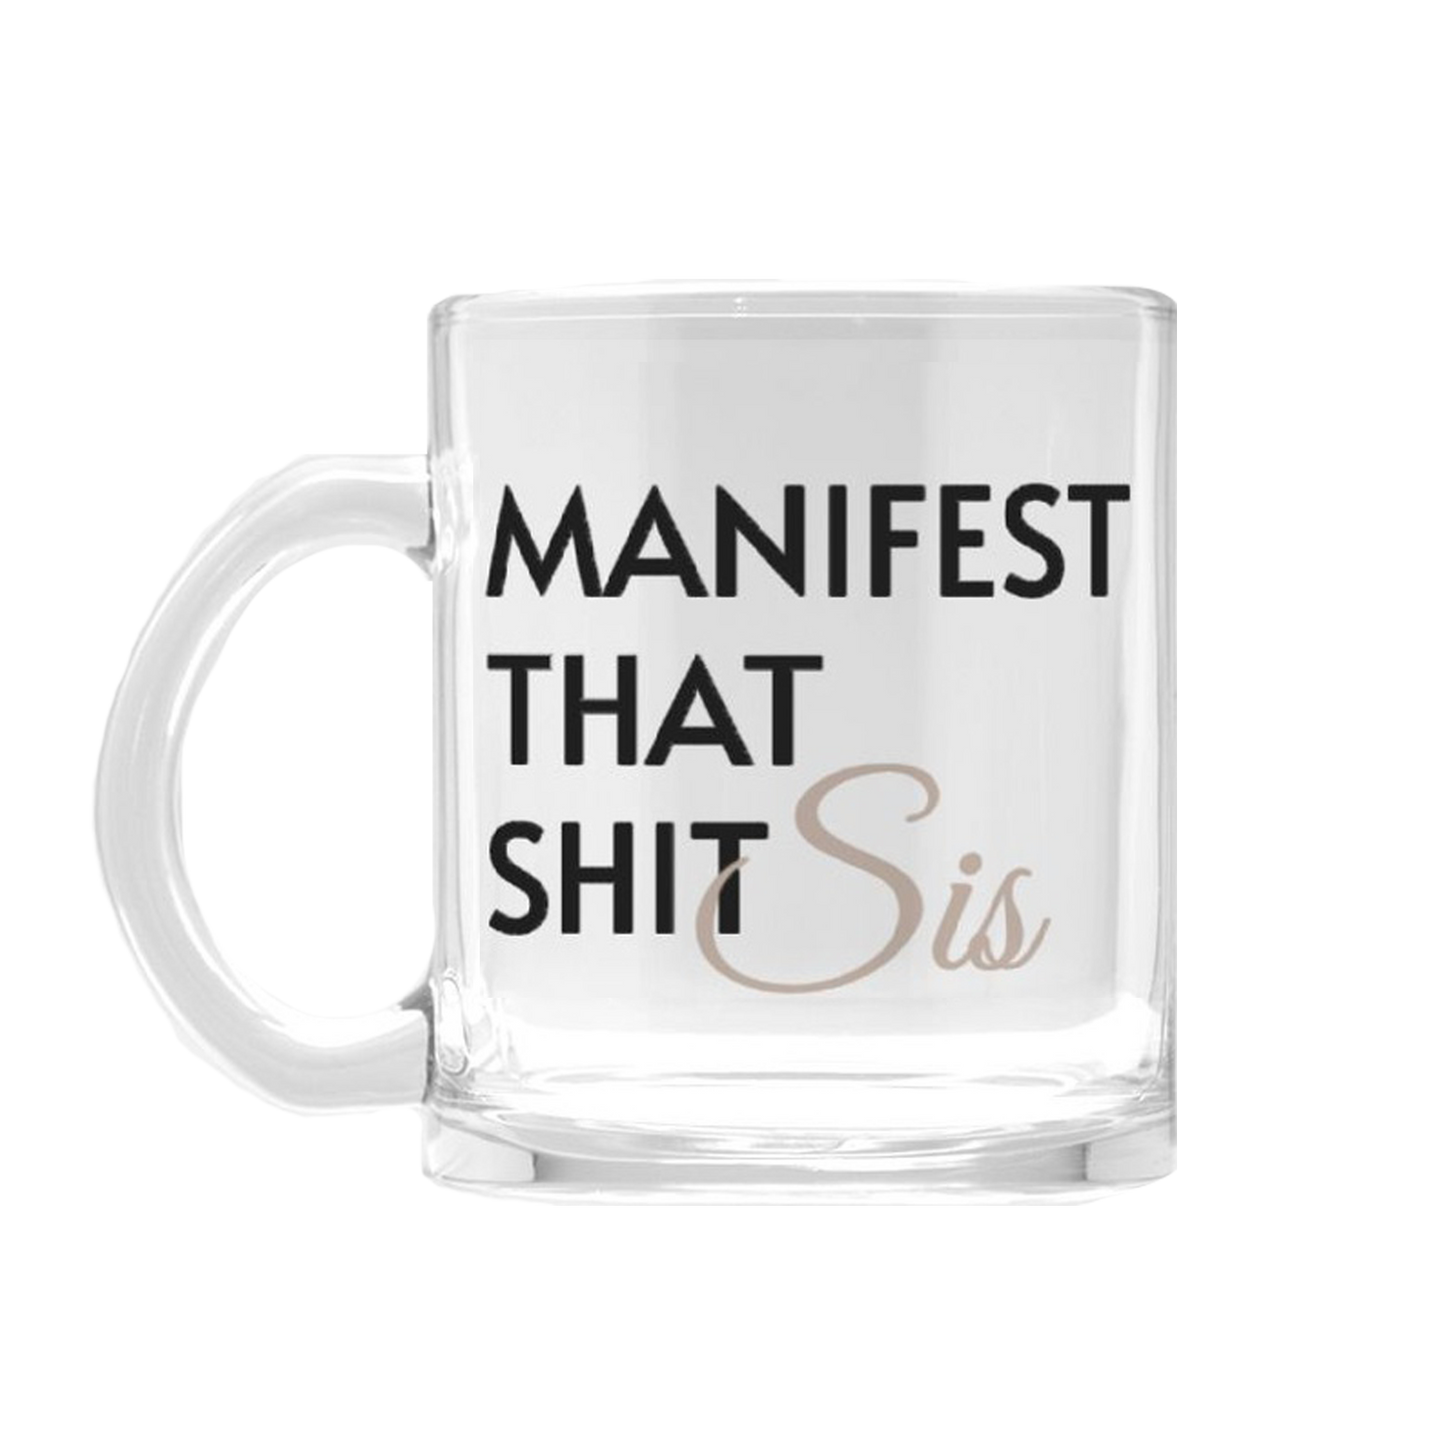 Manifest That Shit Sis Glass Mug